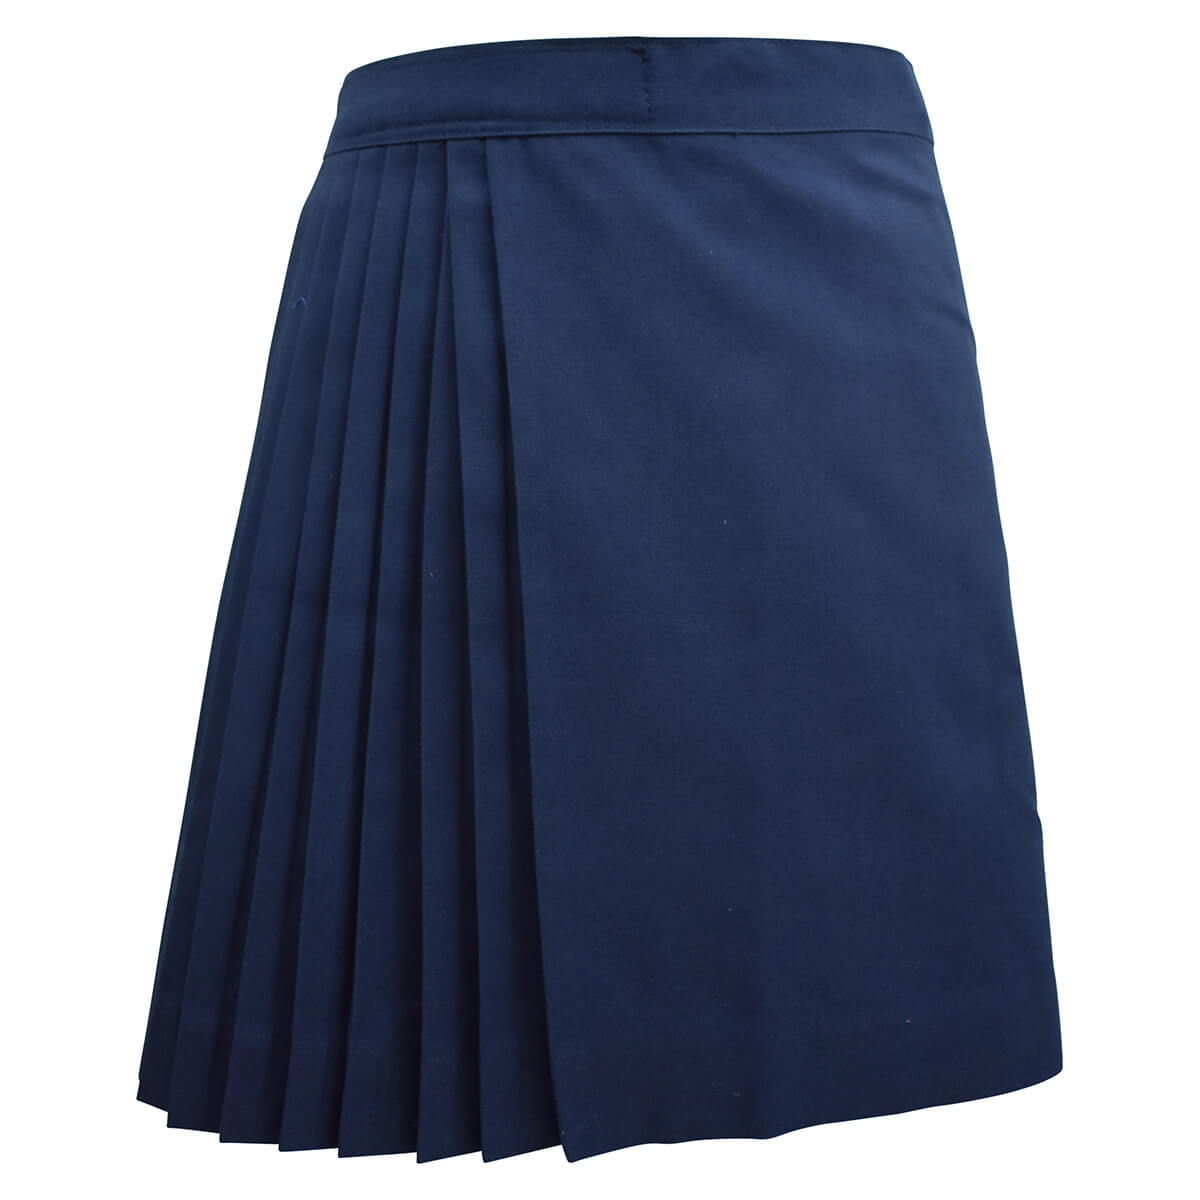 Netball skirt pleated | Ivanhoe Primary School | Noone